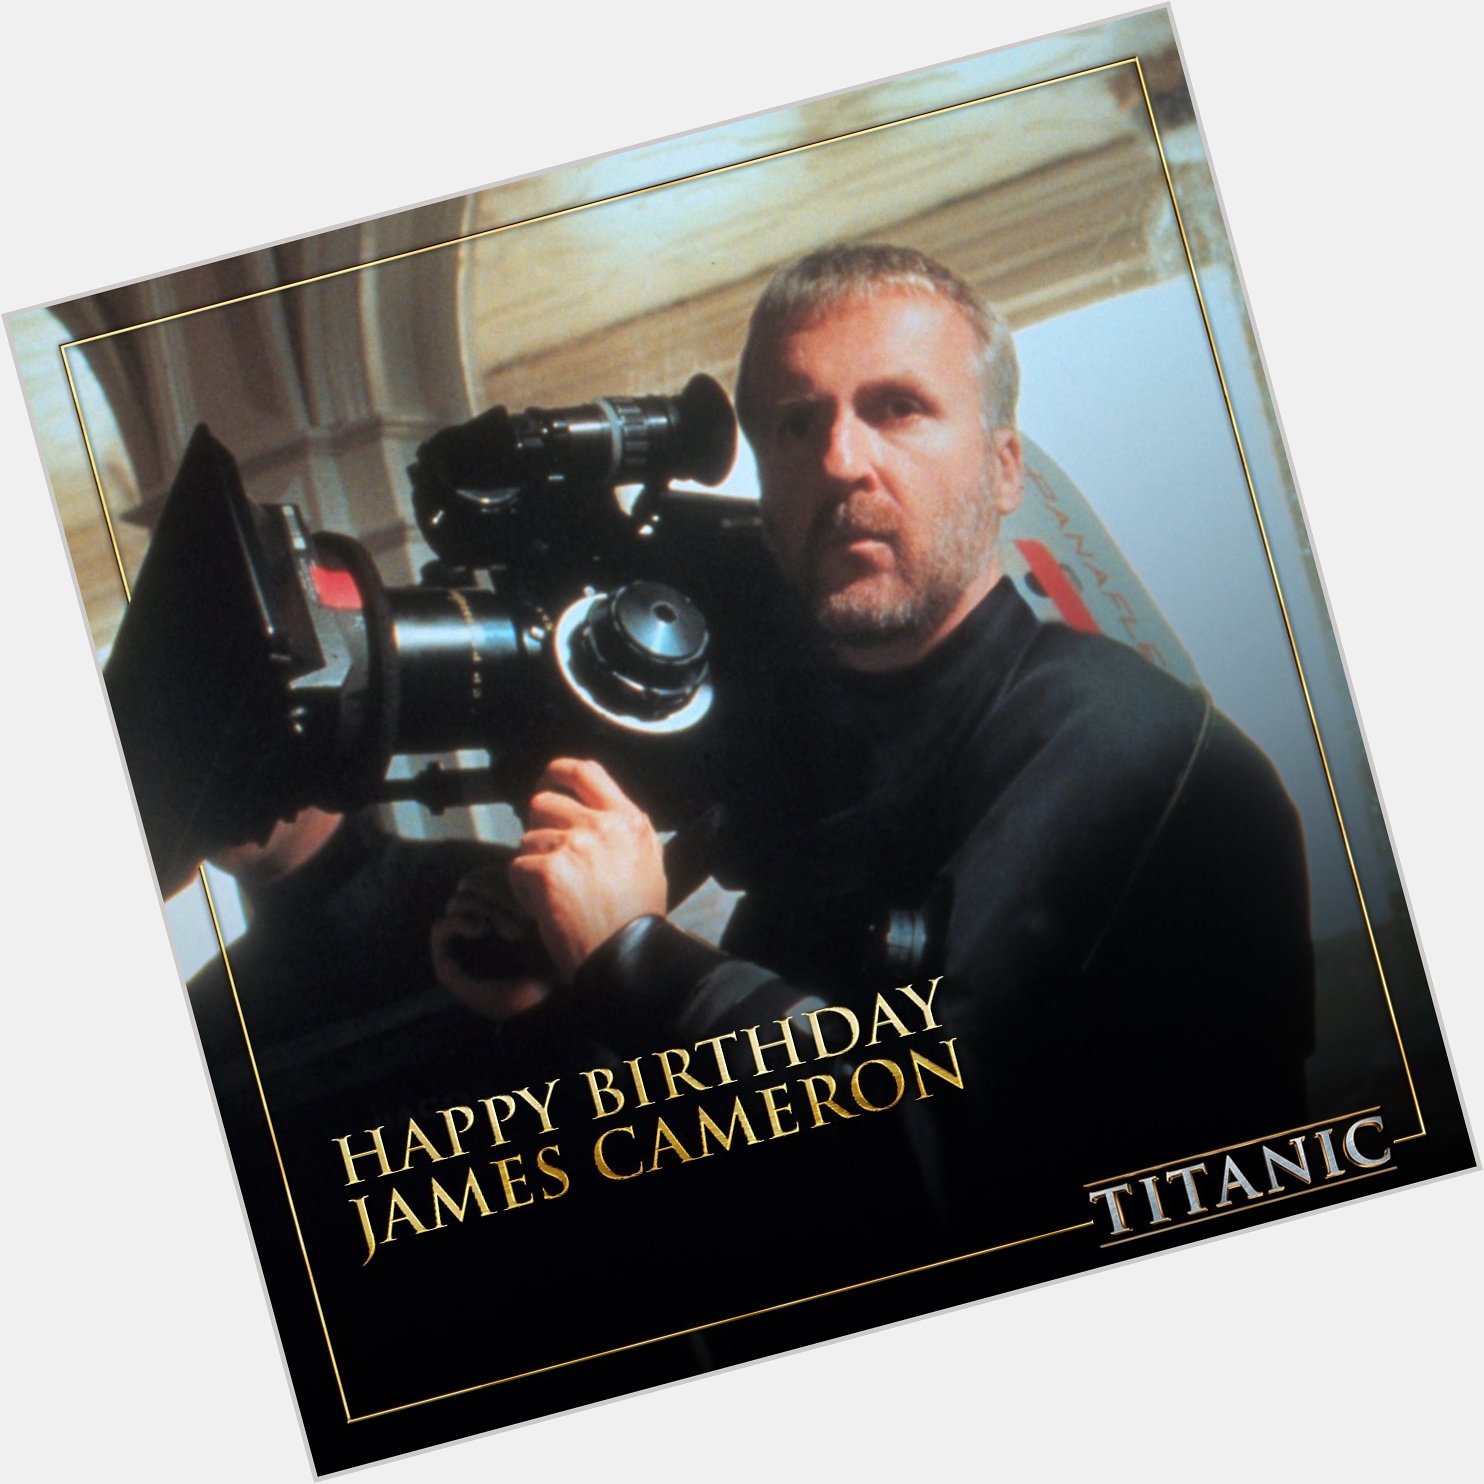 Wishing a happy birthday to Titanic director James Cameron! 